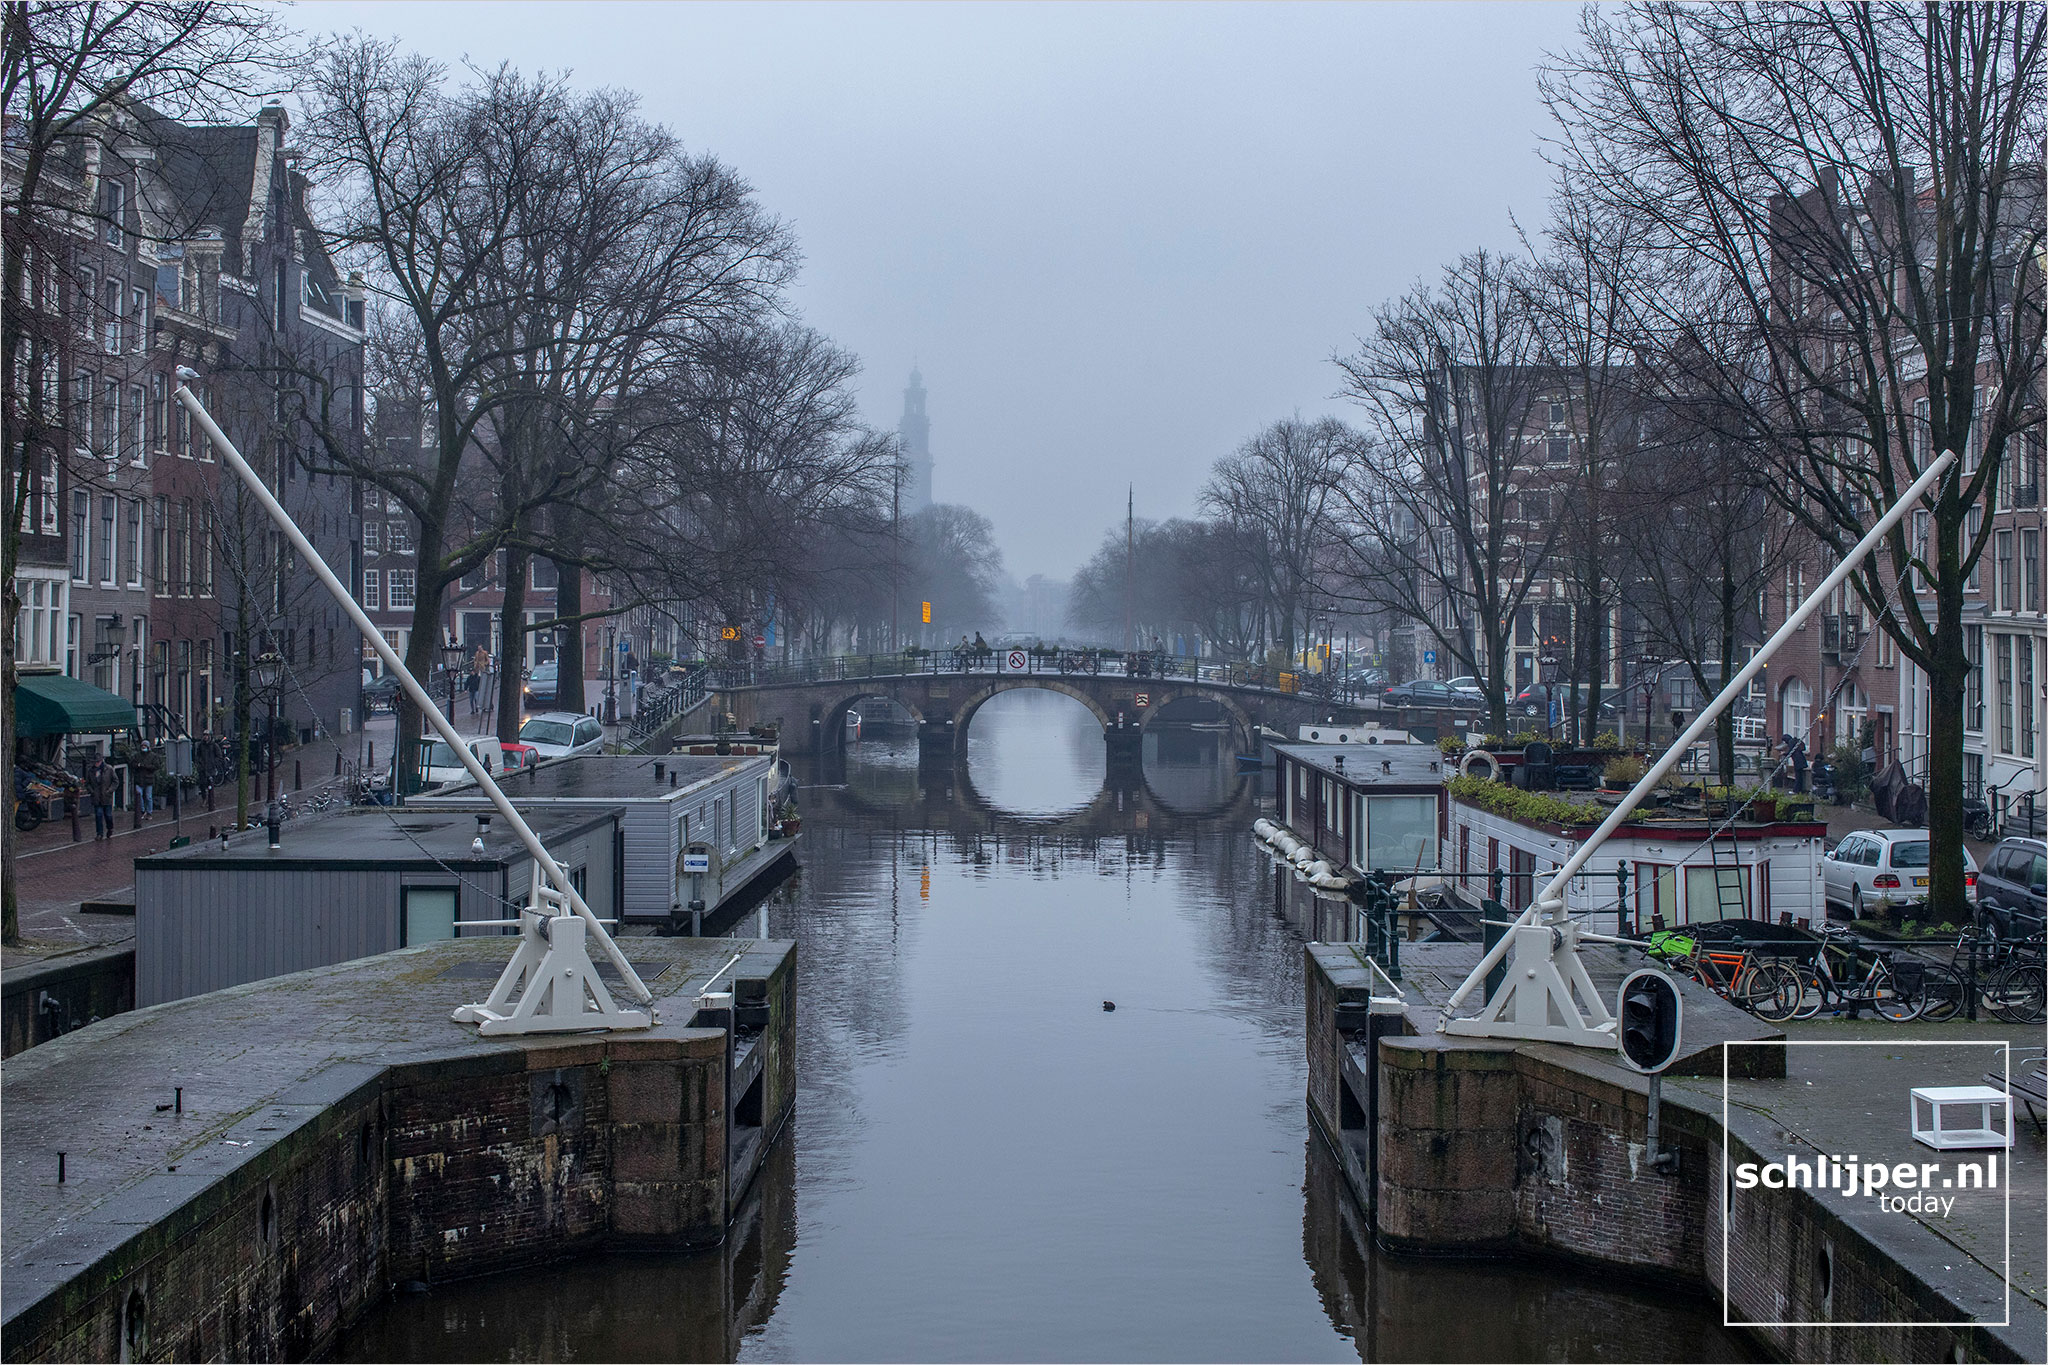 The Netherlands, Amsterdam, 1 februari 2021